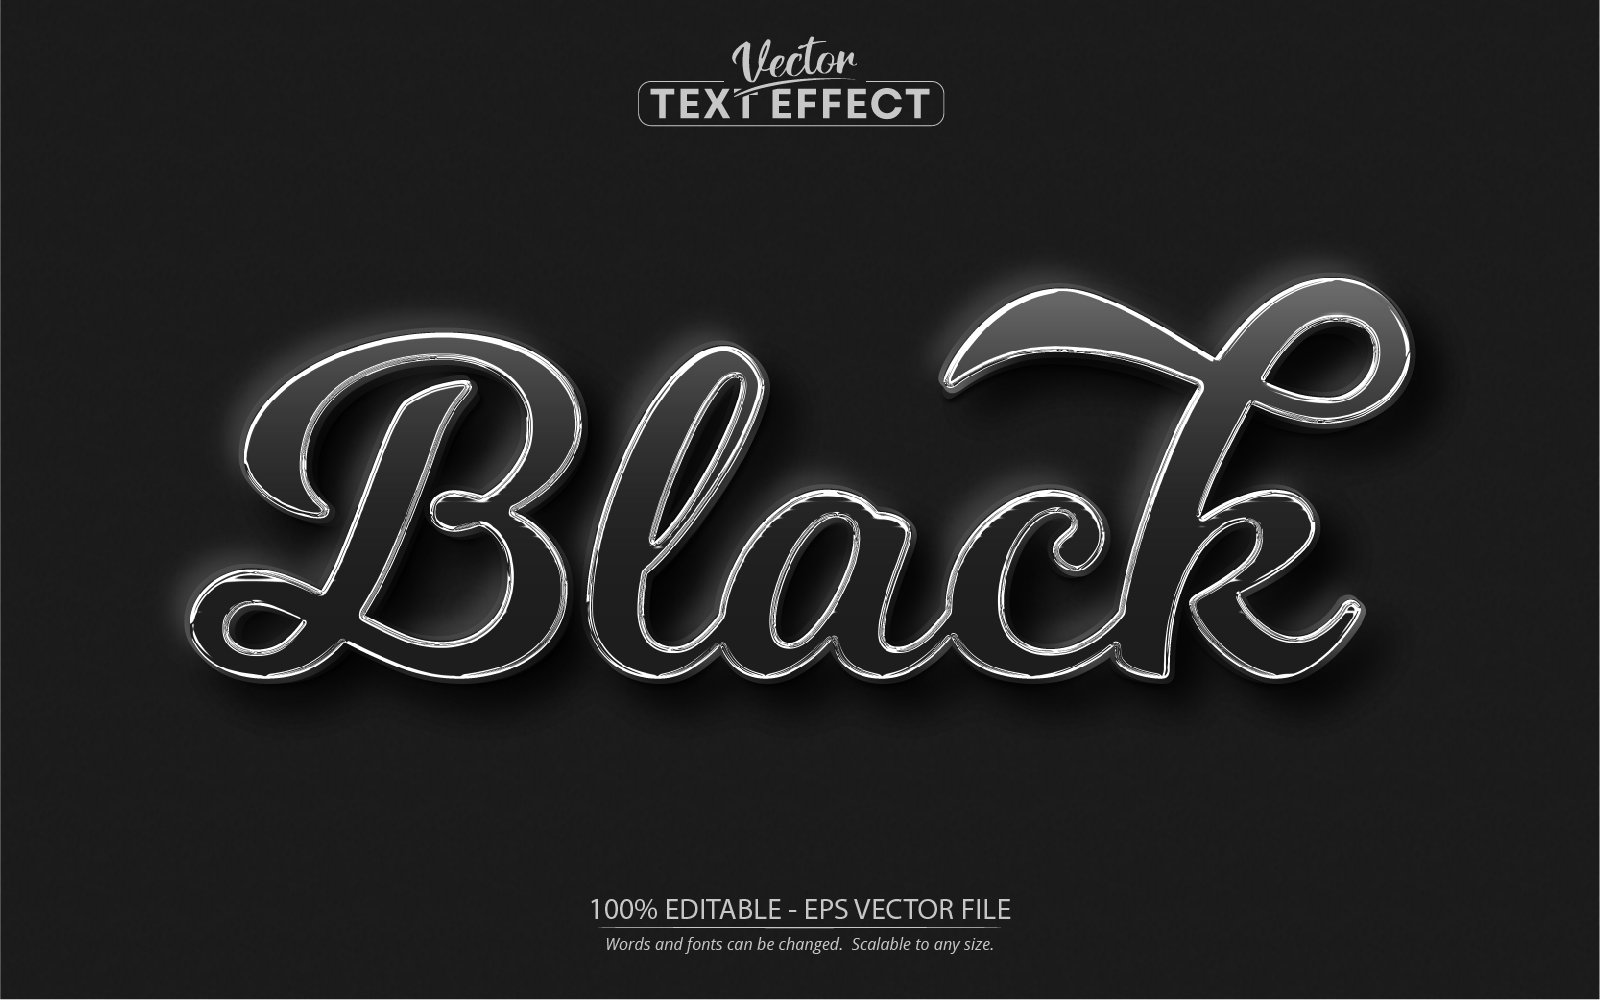 Black - Editable Text Effect, Calligraphy Metallic Shiny Text Style, Graphics Illustration